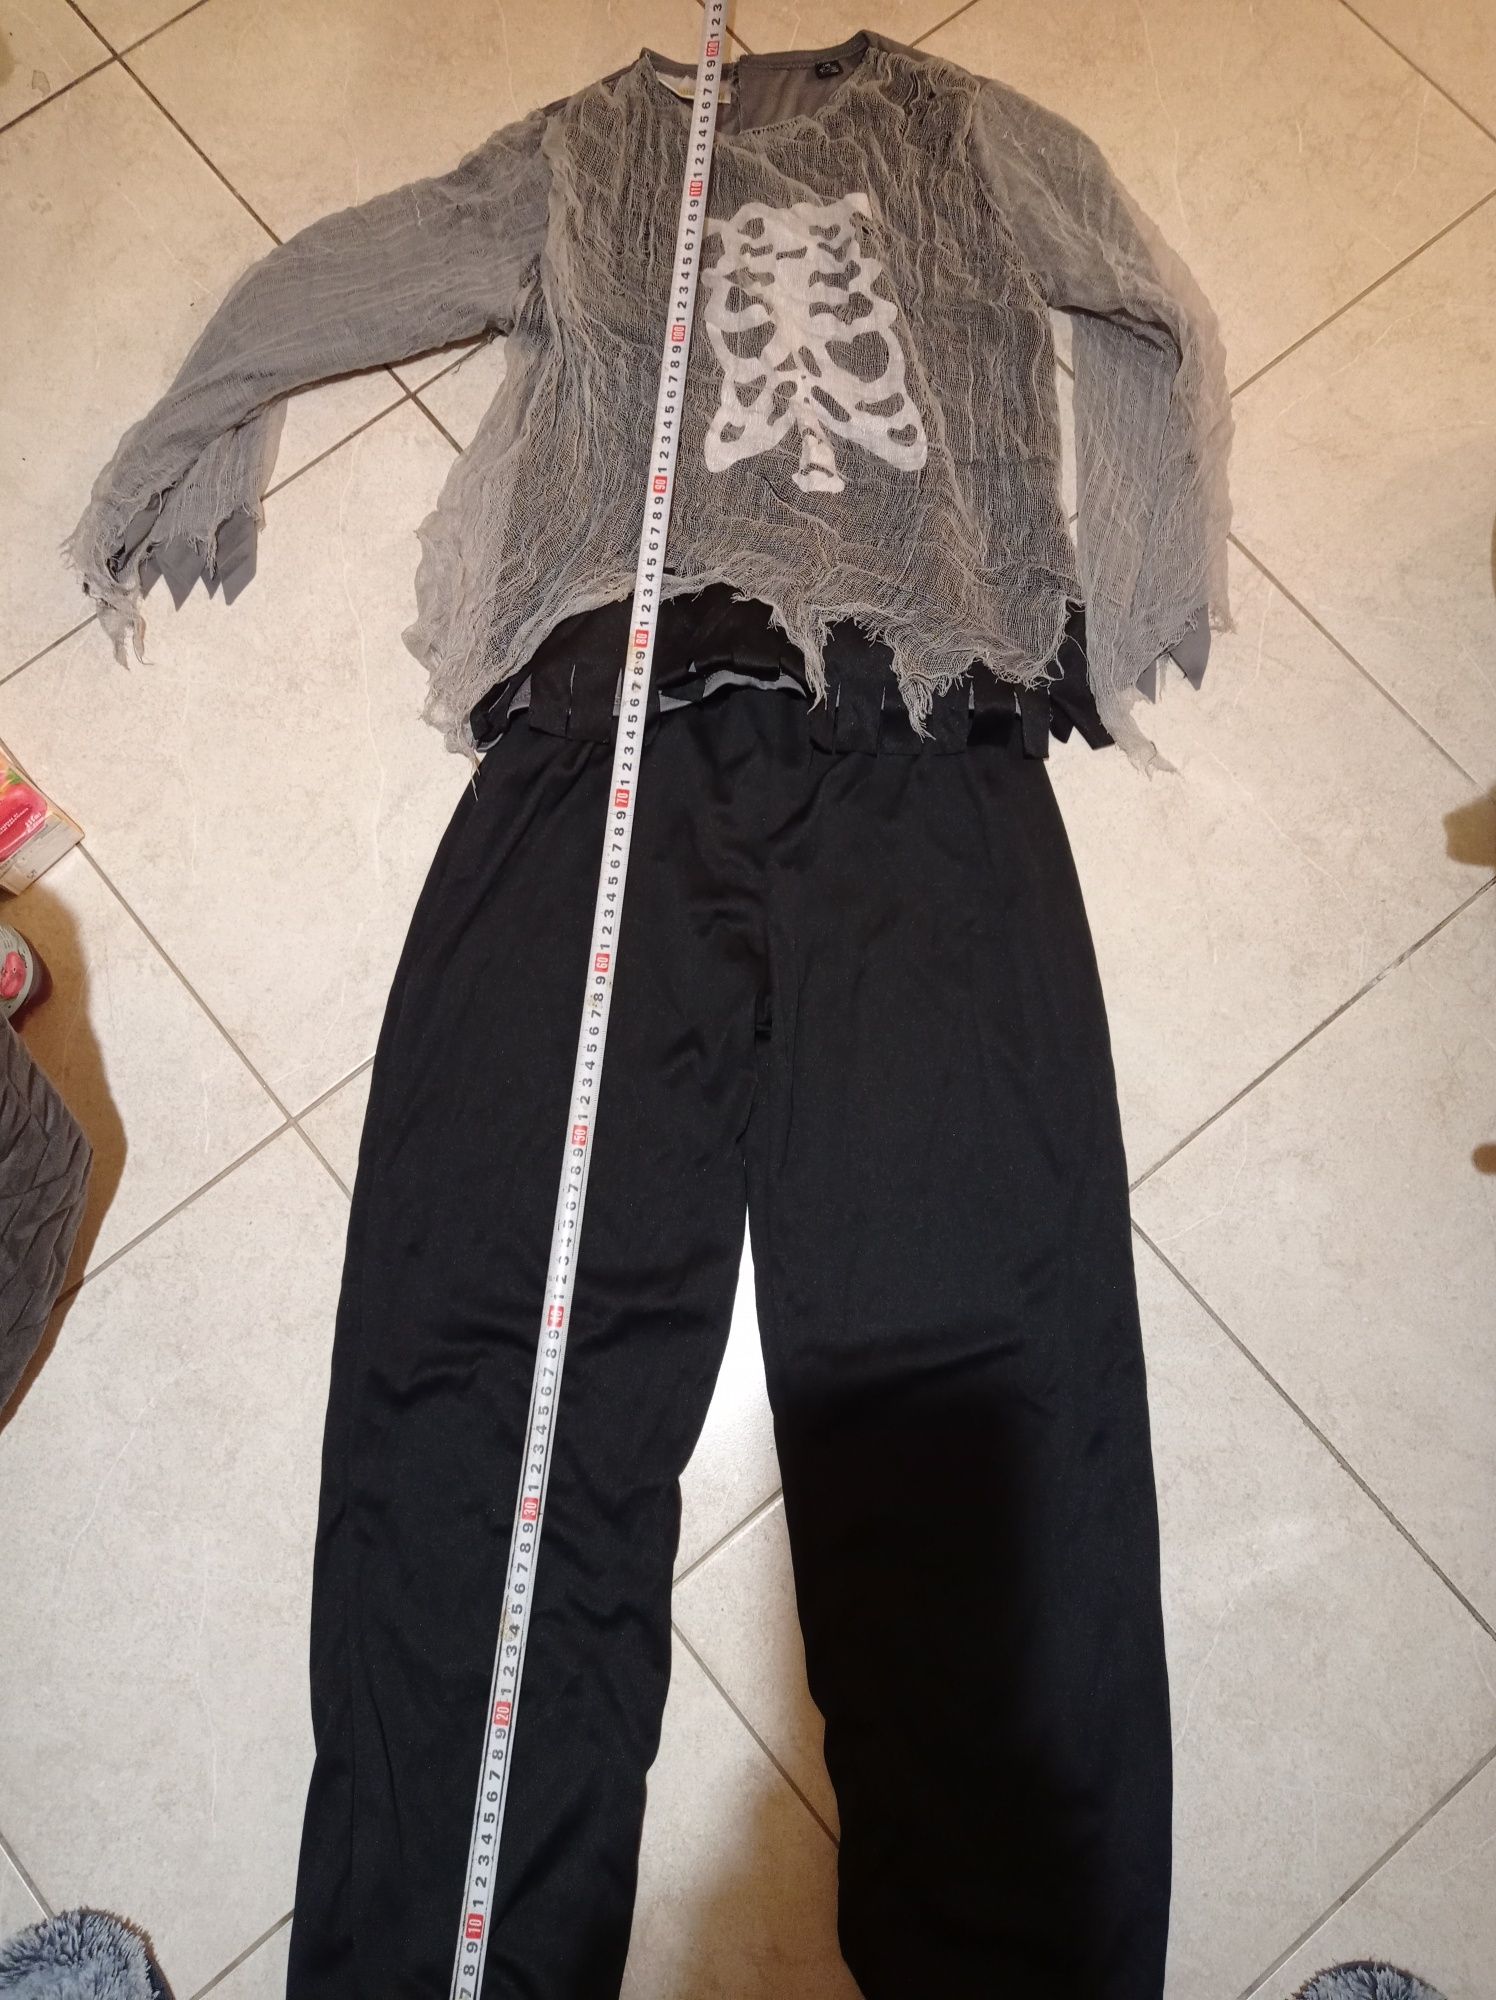 Зомби костюм за 140 см